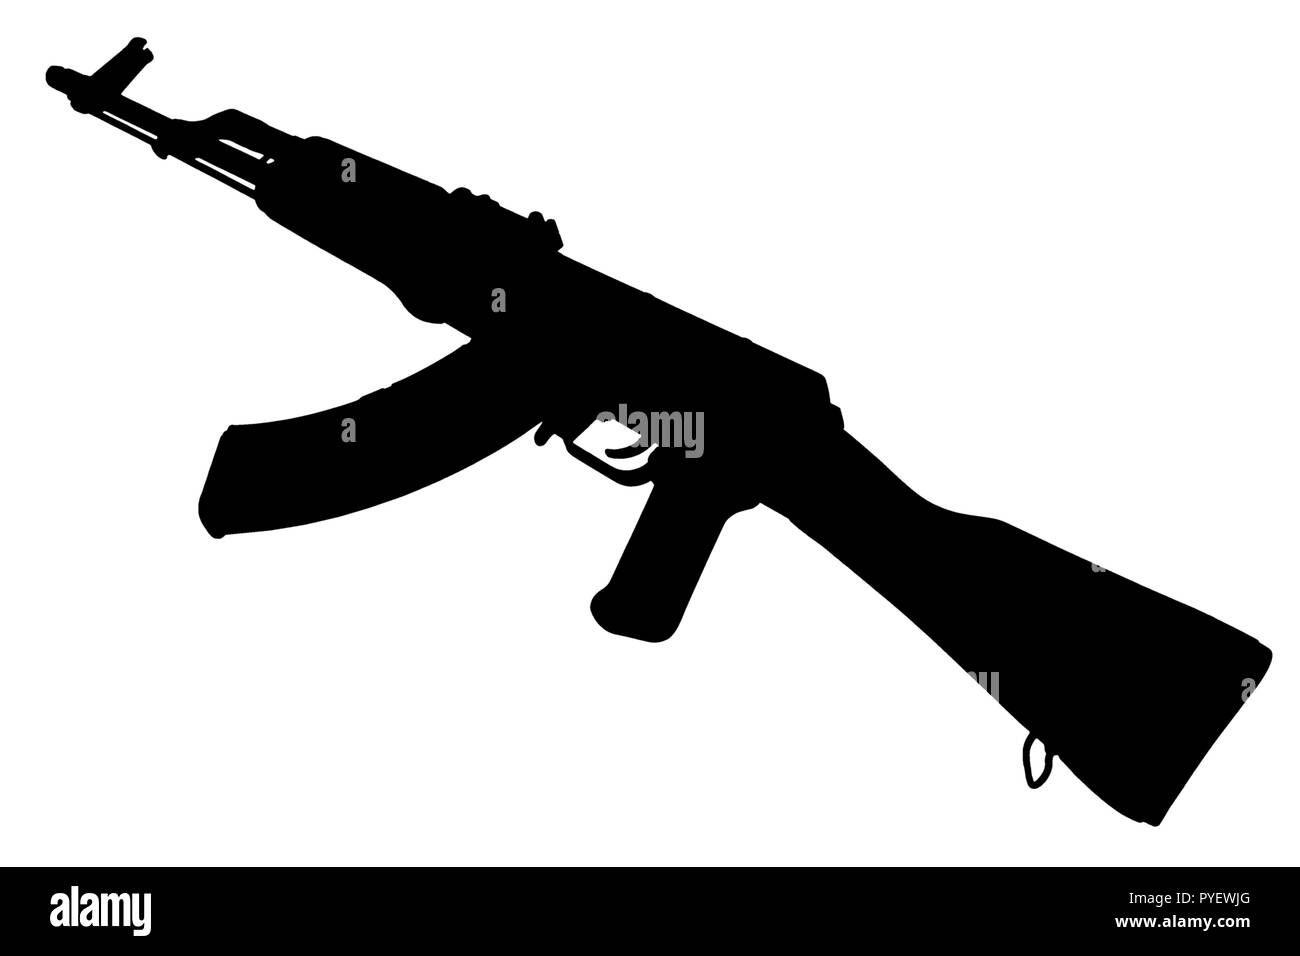 AK - 47 (AKM) assault rifle black silhouette Stock Photo